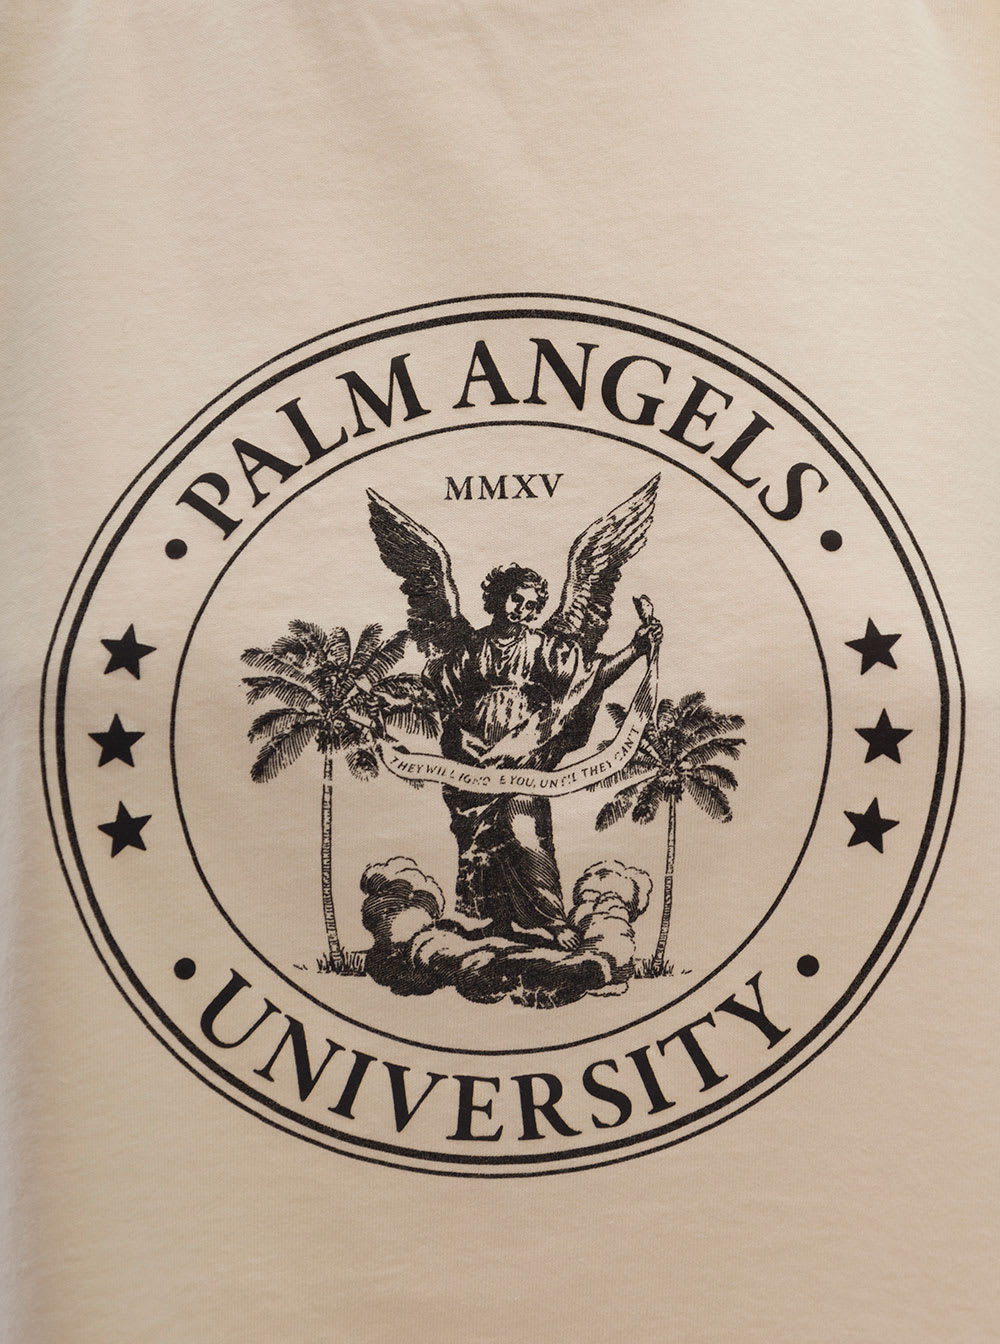 Green College logo-print cotton-jersey T-shirt, Palm Angels